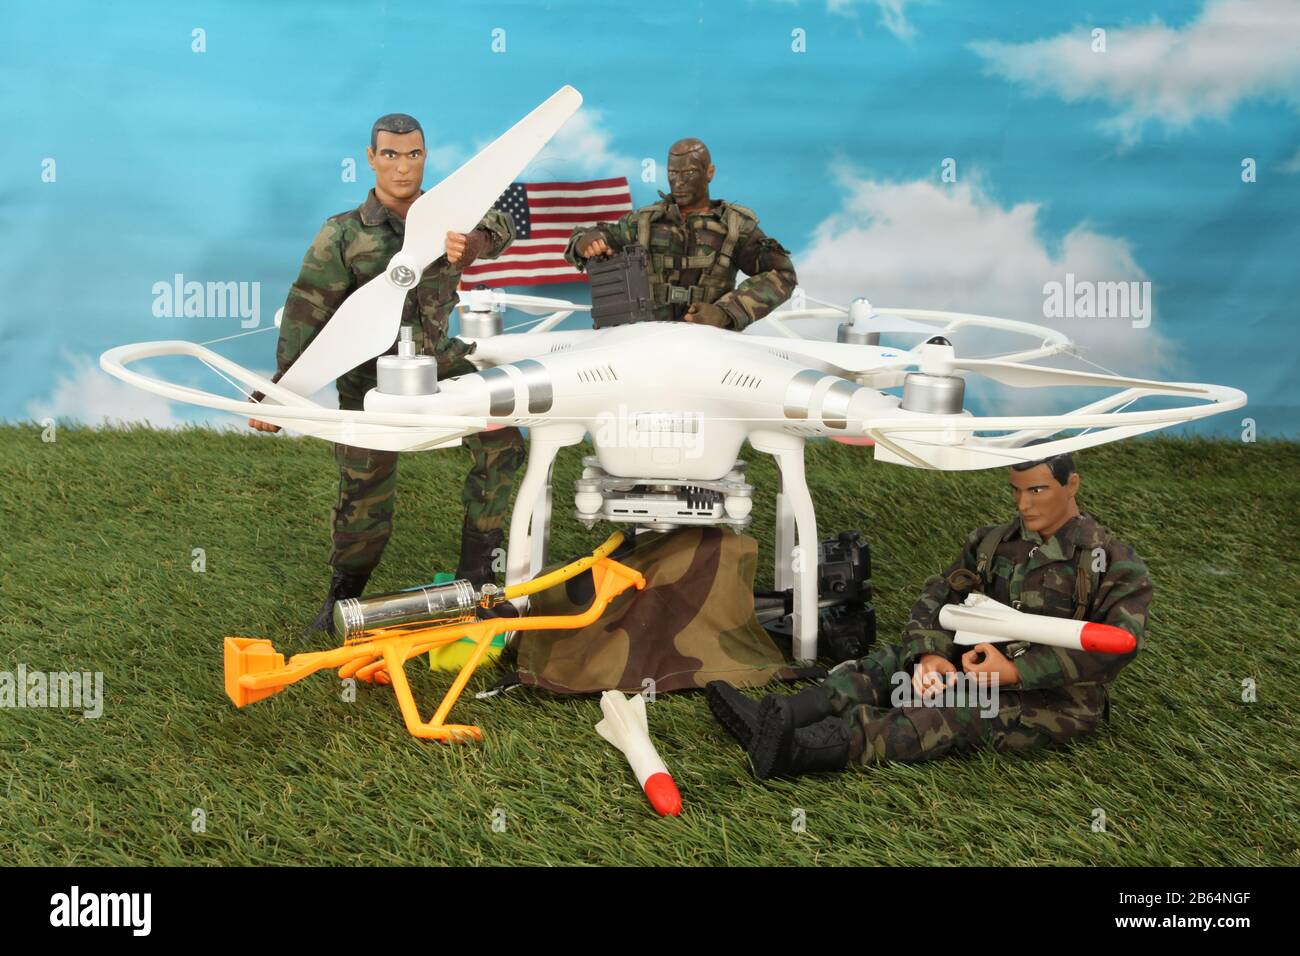 Drone diorama Stock Photo